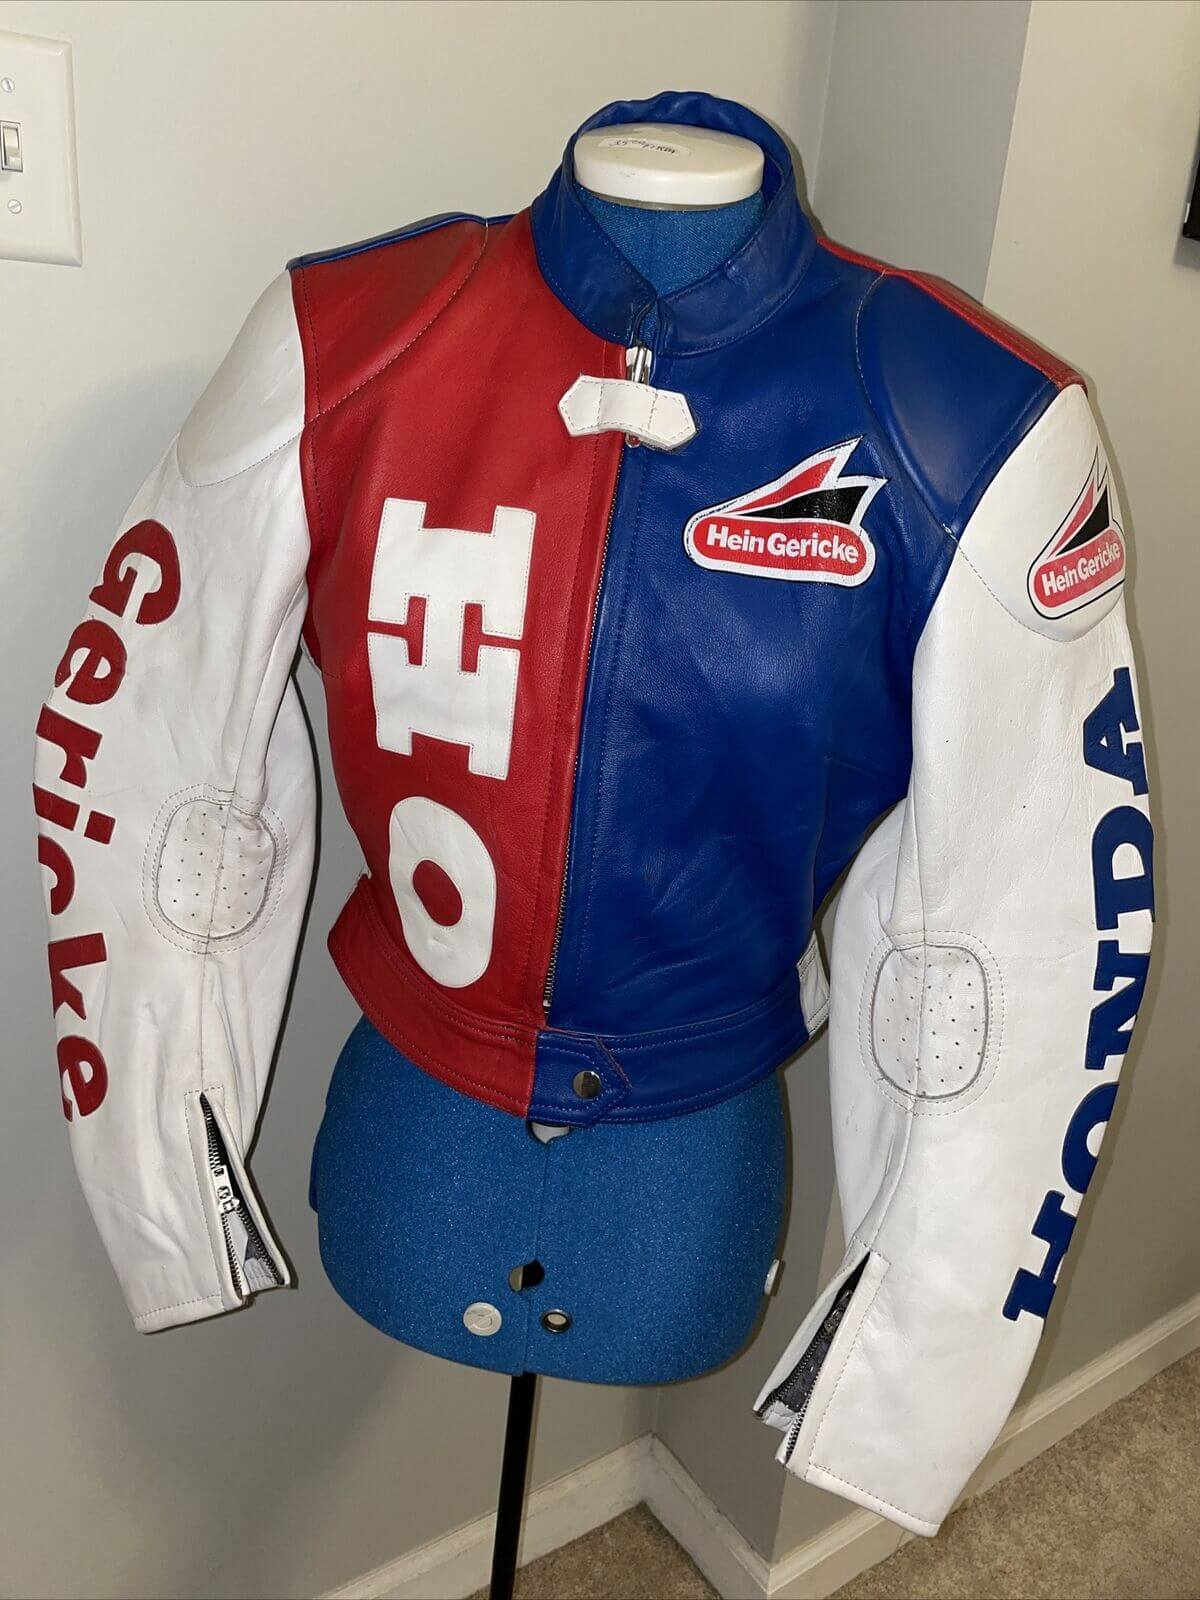 Hein Gericke Honda Racing Leather Jacket - of Jacket